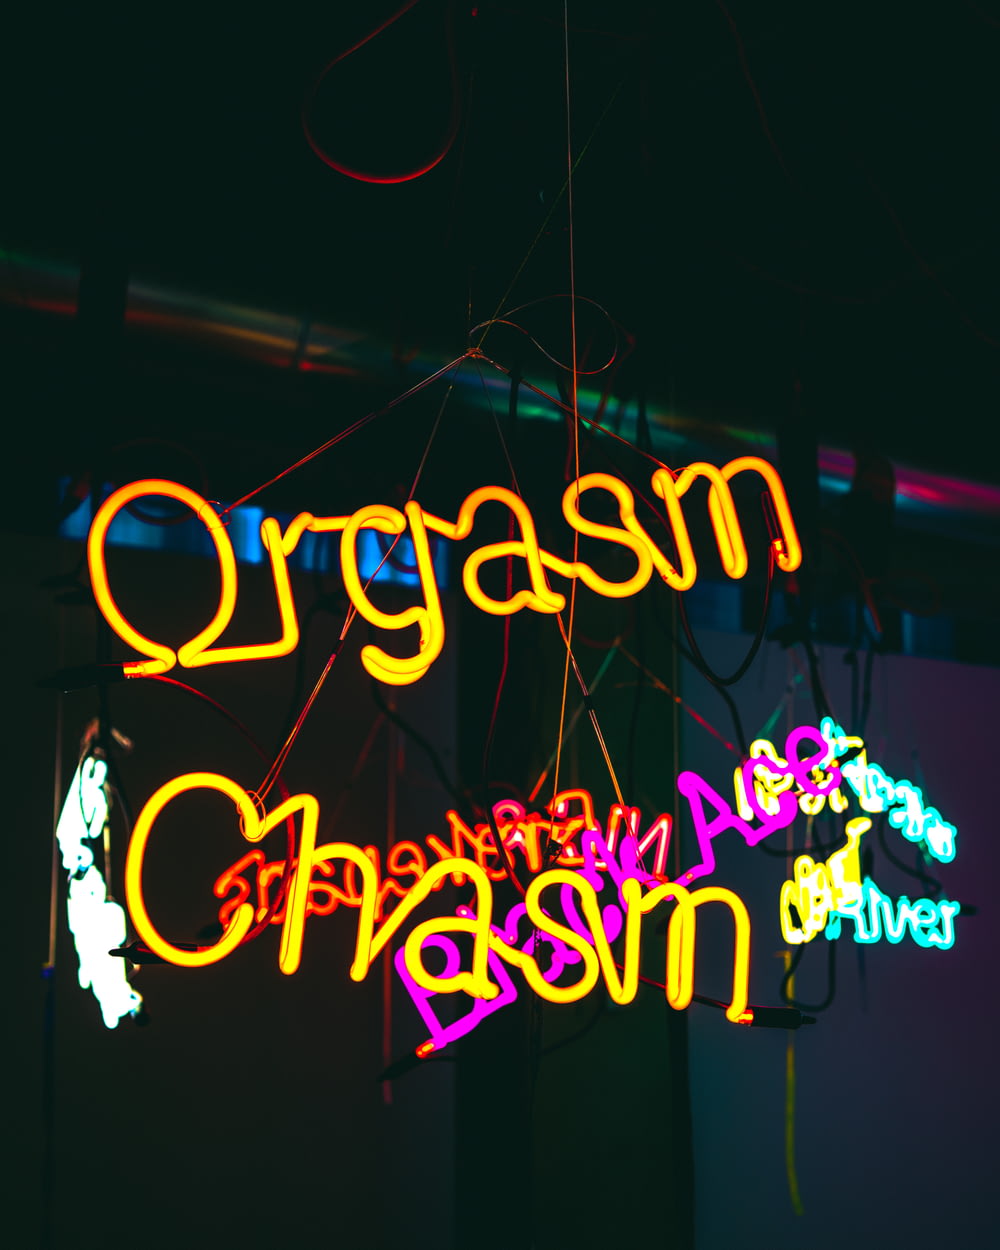 Orgasmo Chasm sinalização neon